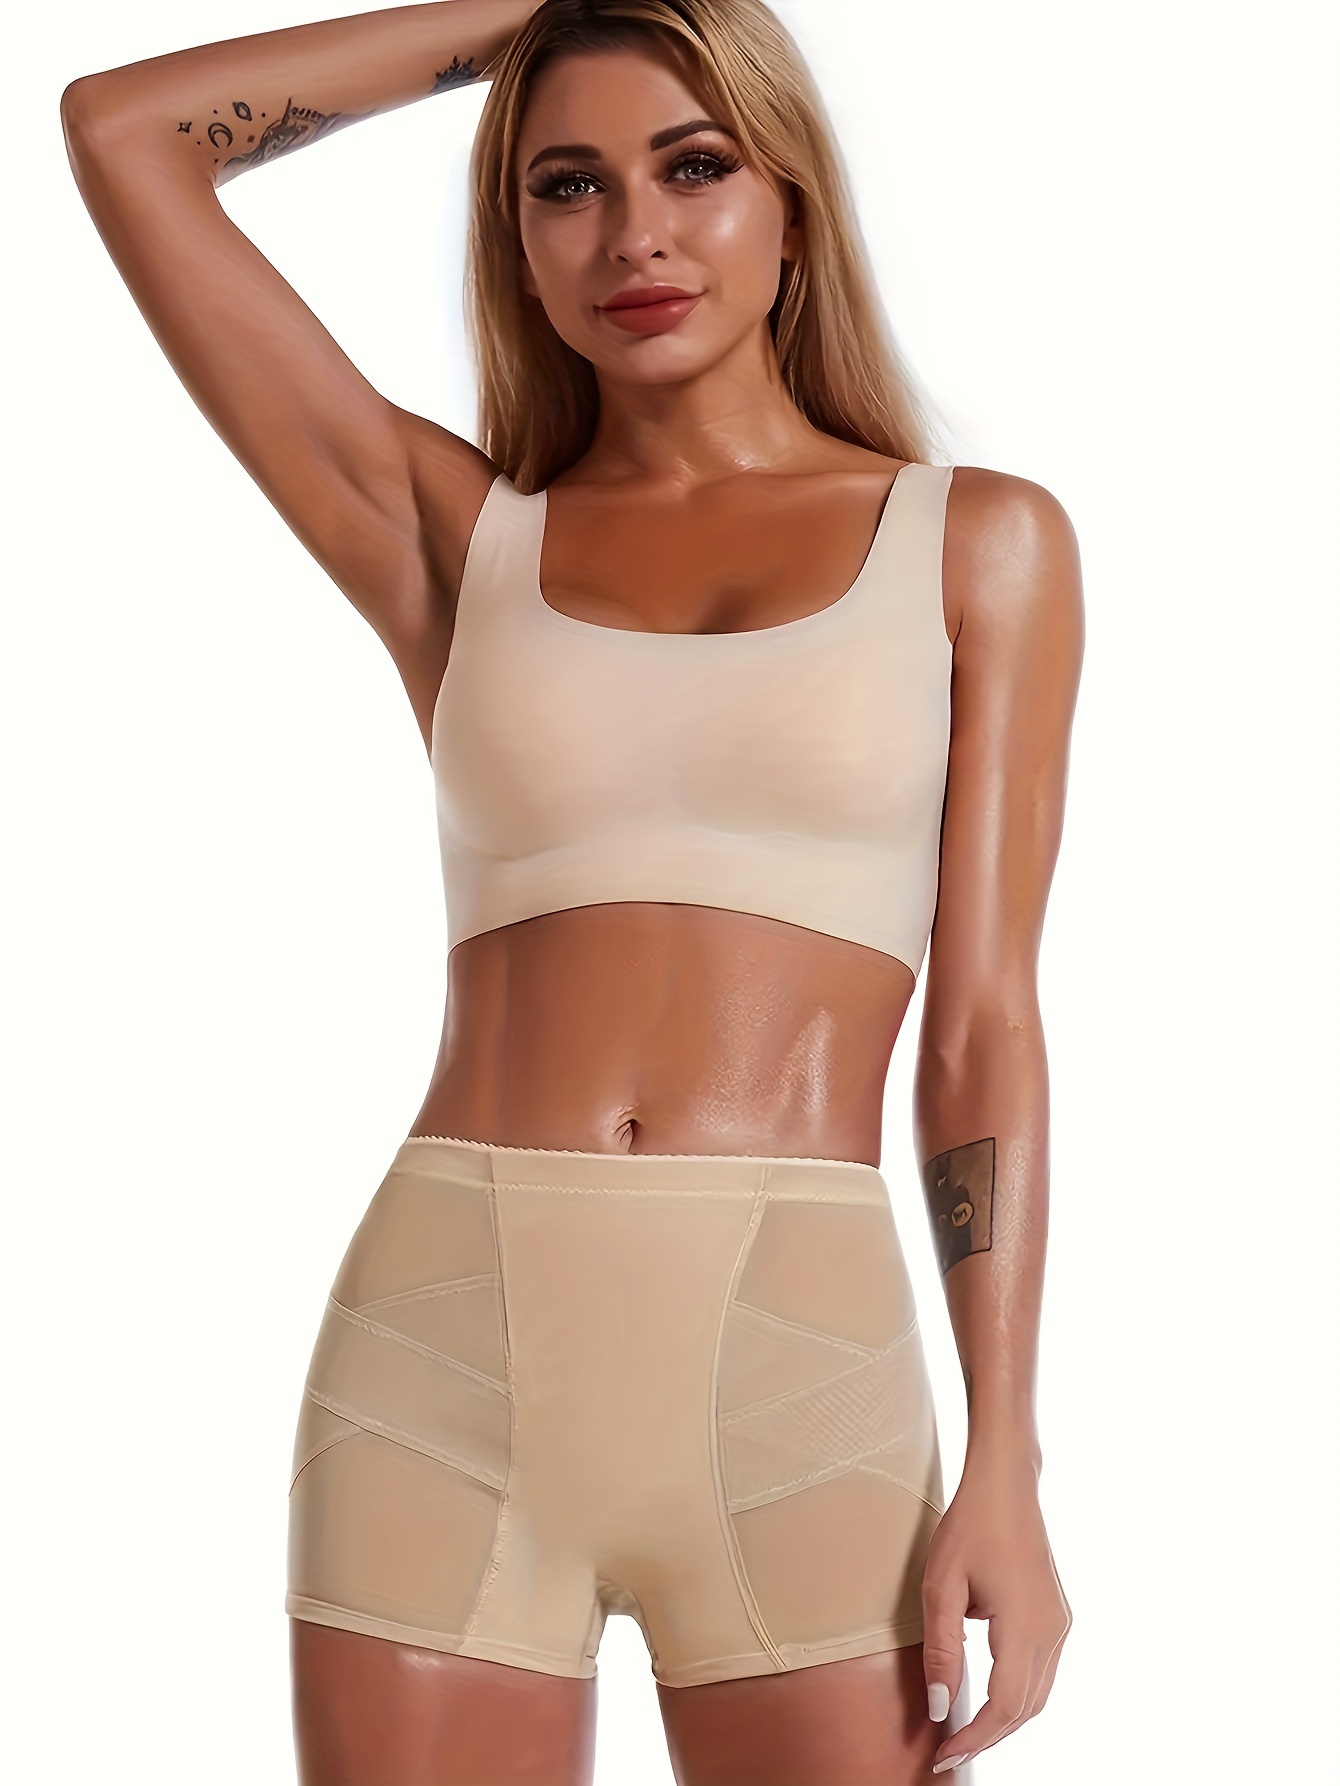 Women Butt Hip Enhancer Booty Padded Underwear Panties Body Shaper Seamless  Lifter Panty Boyshorts Shapewear for Ladies